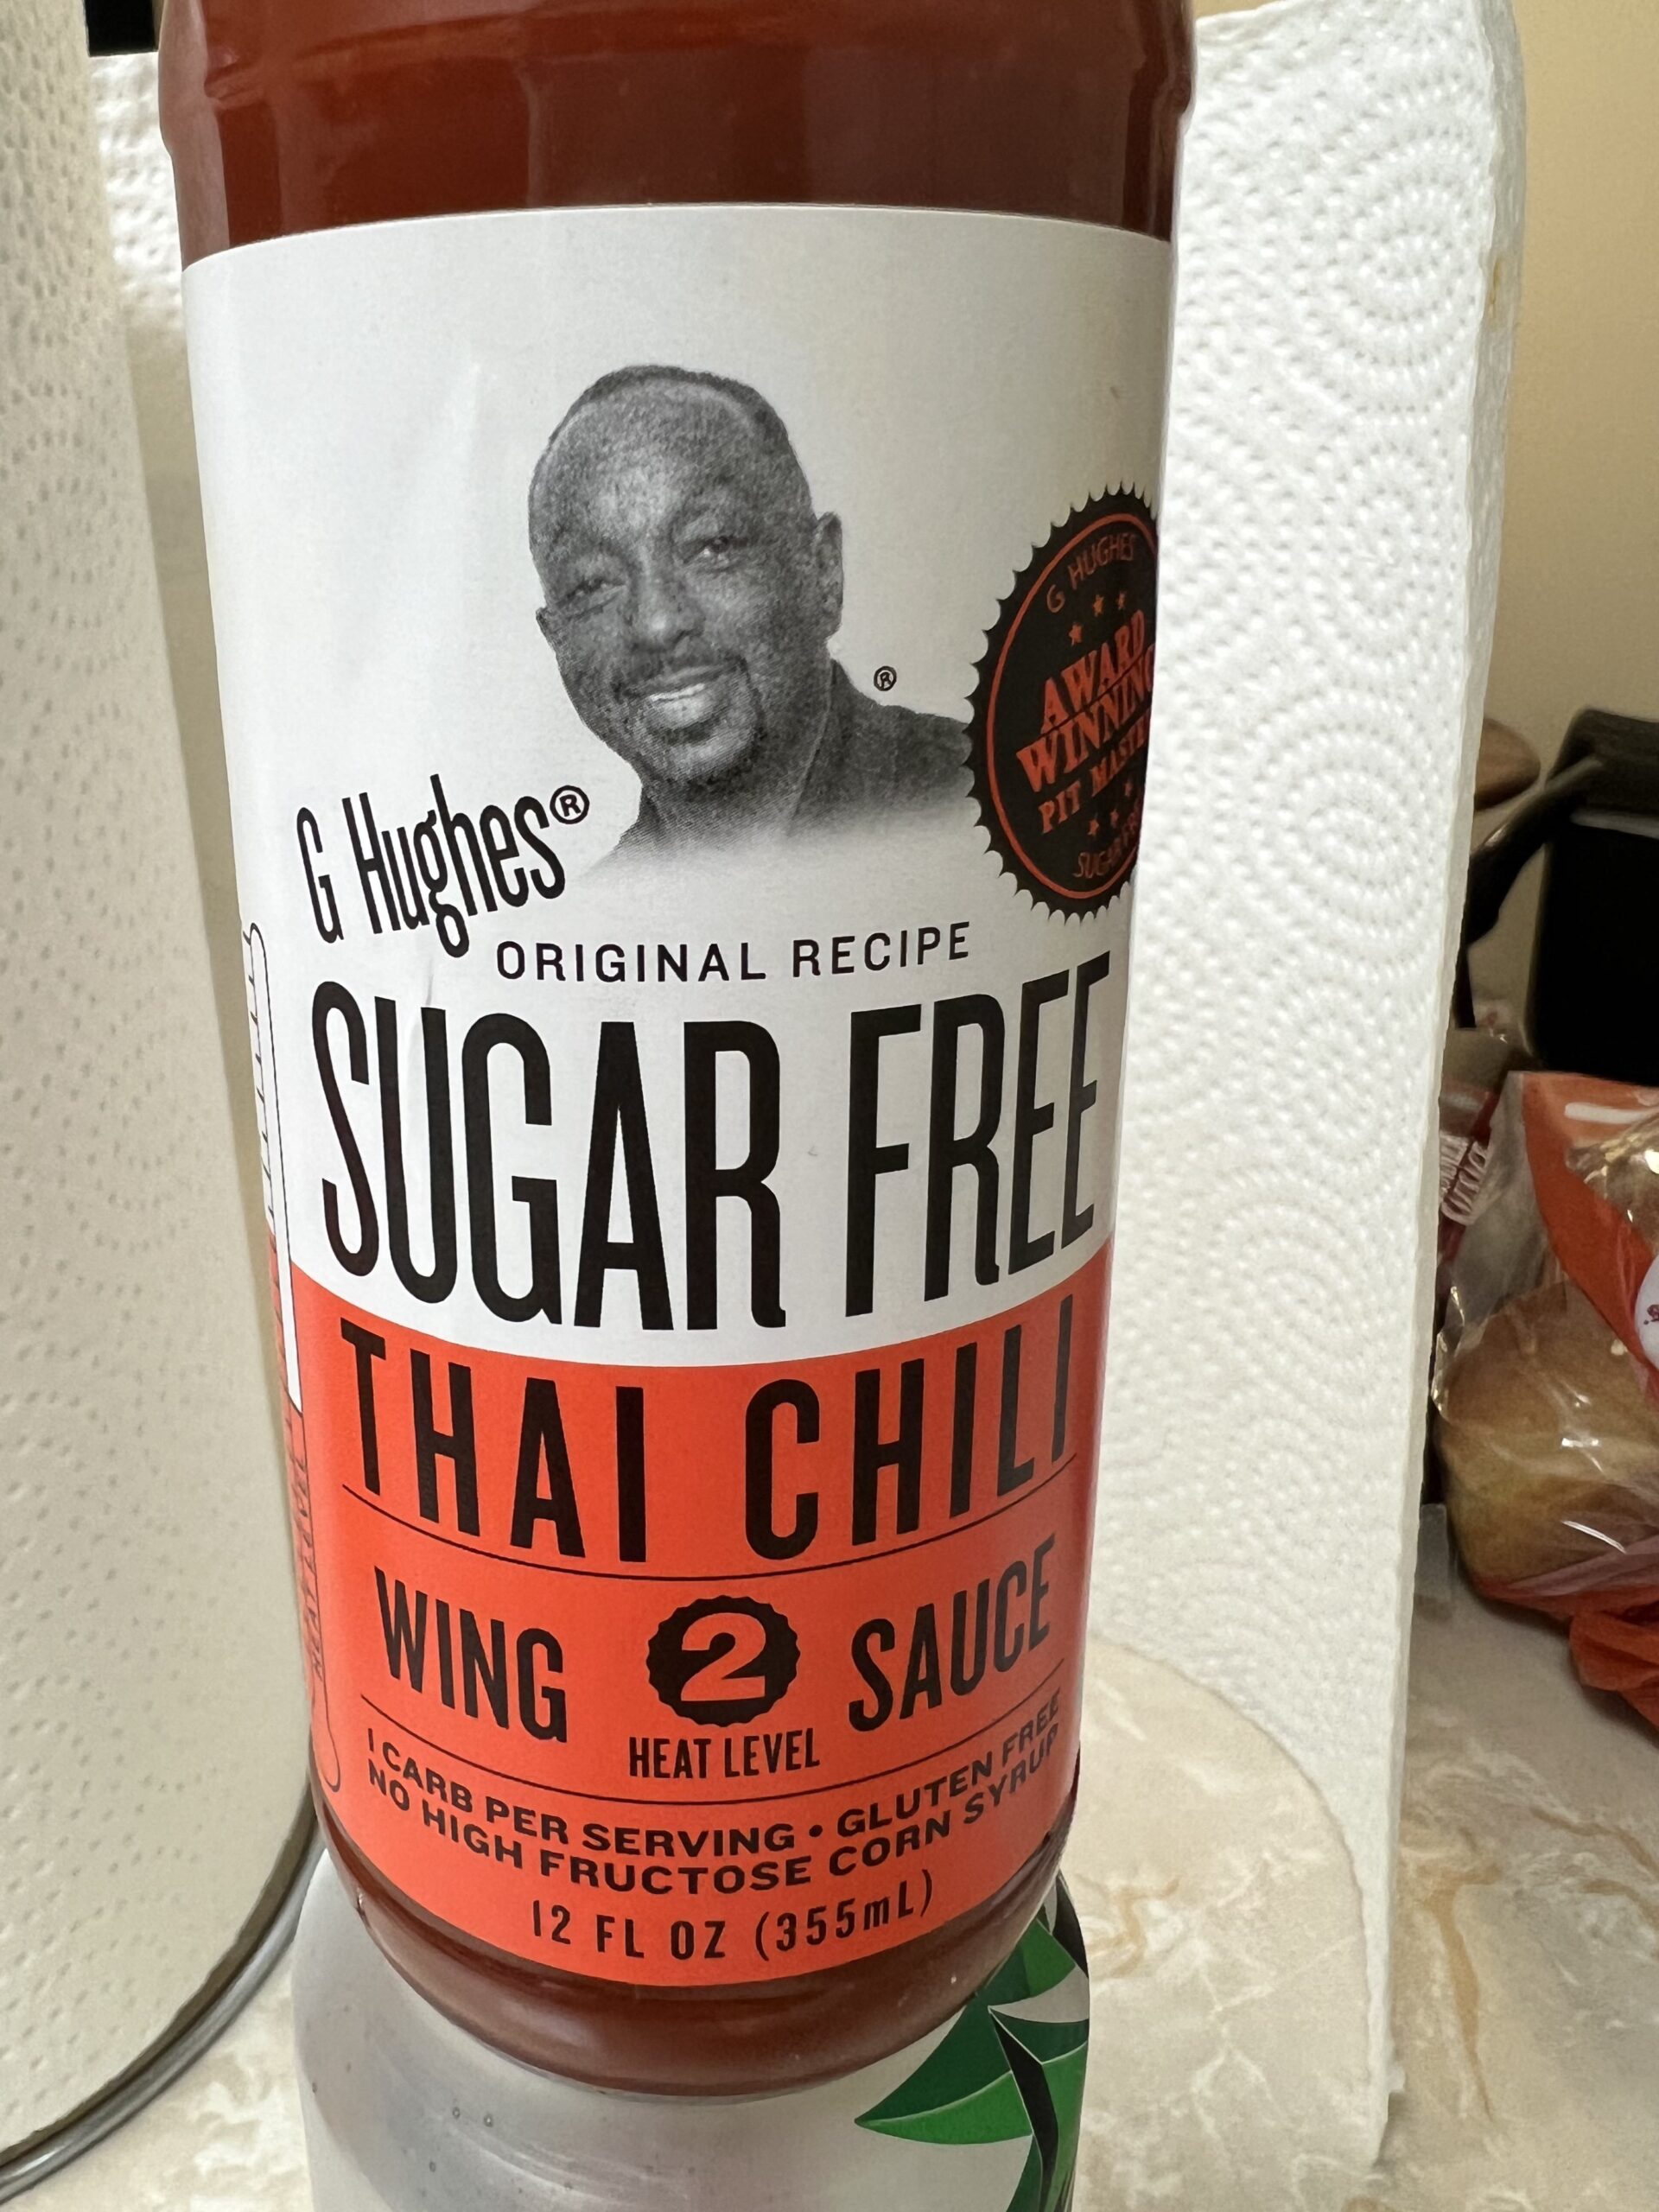 G Hughes Thai Chili Wing Sauce